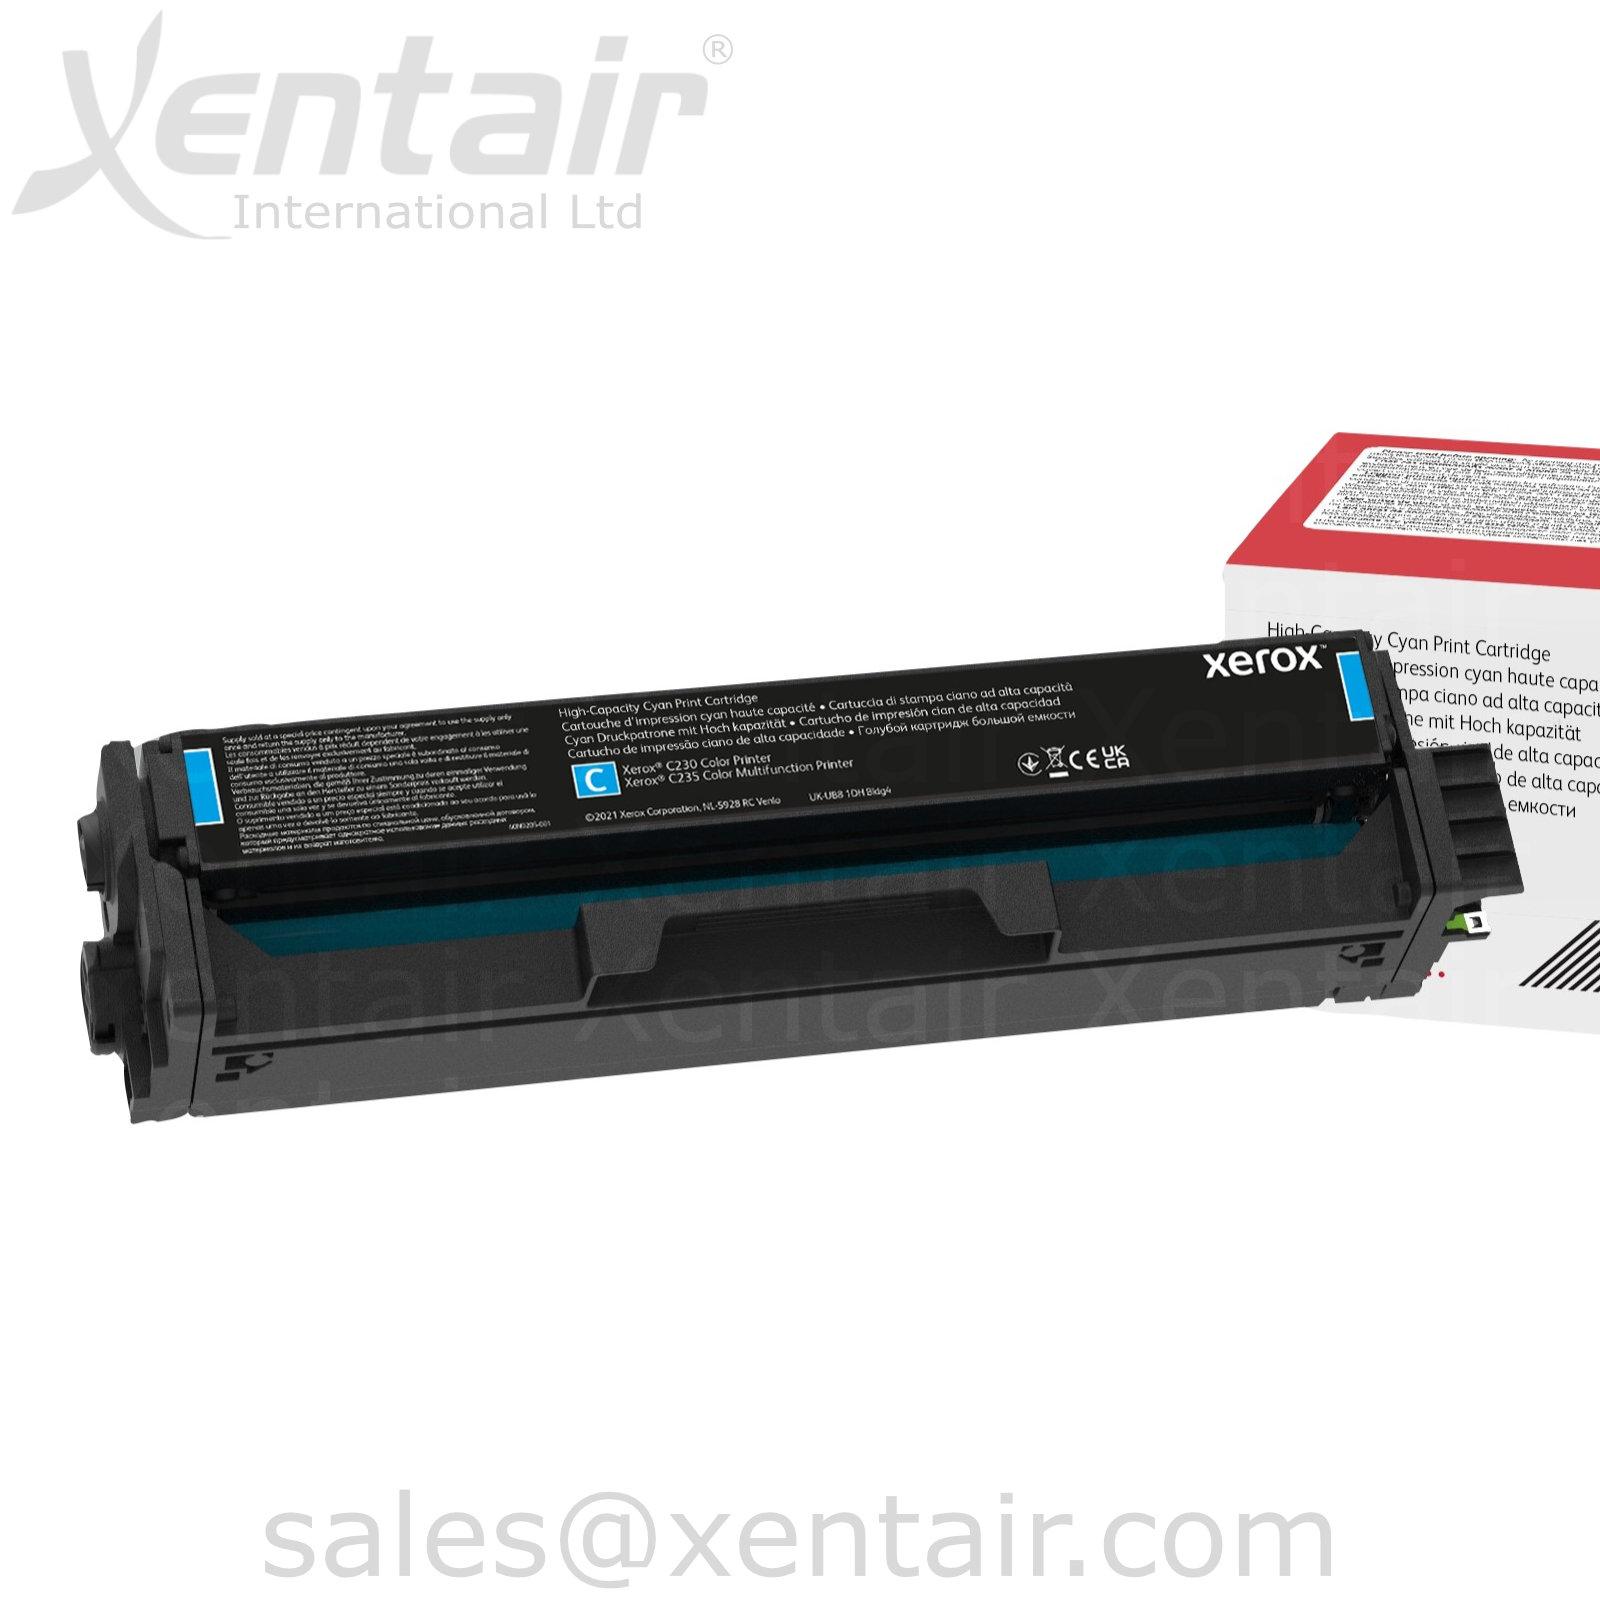 Xerox® C230 C235 High Capacity Cyan Toner Cartridge 006R04392 6R04392